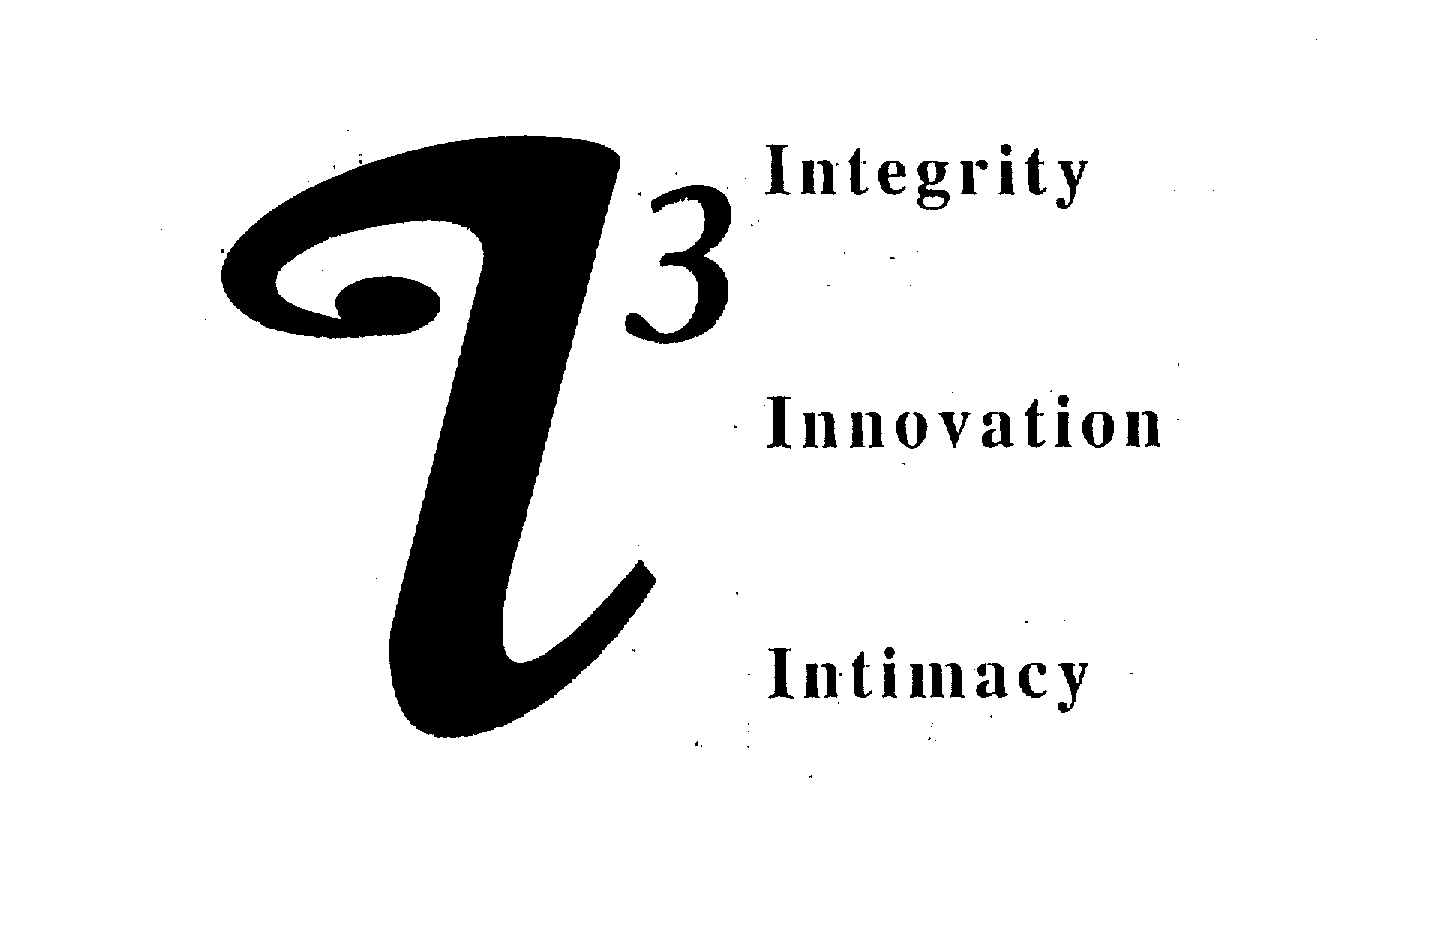  I 3 INTEGRITY INNOVATION INTIMACY